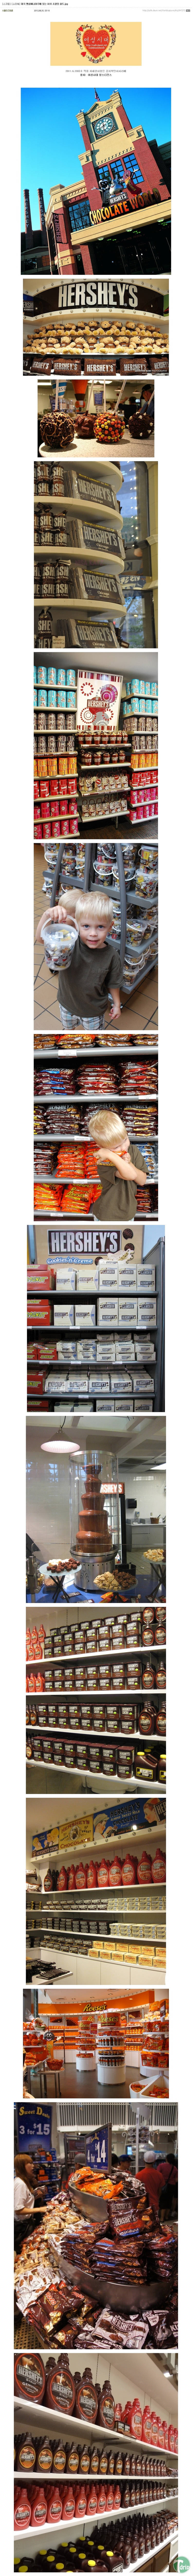 1 (1).jpg : 미국 펜실베니아주에 있는 허쉬 초콜릿 월드.JPG